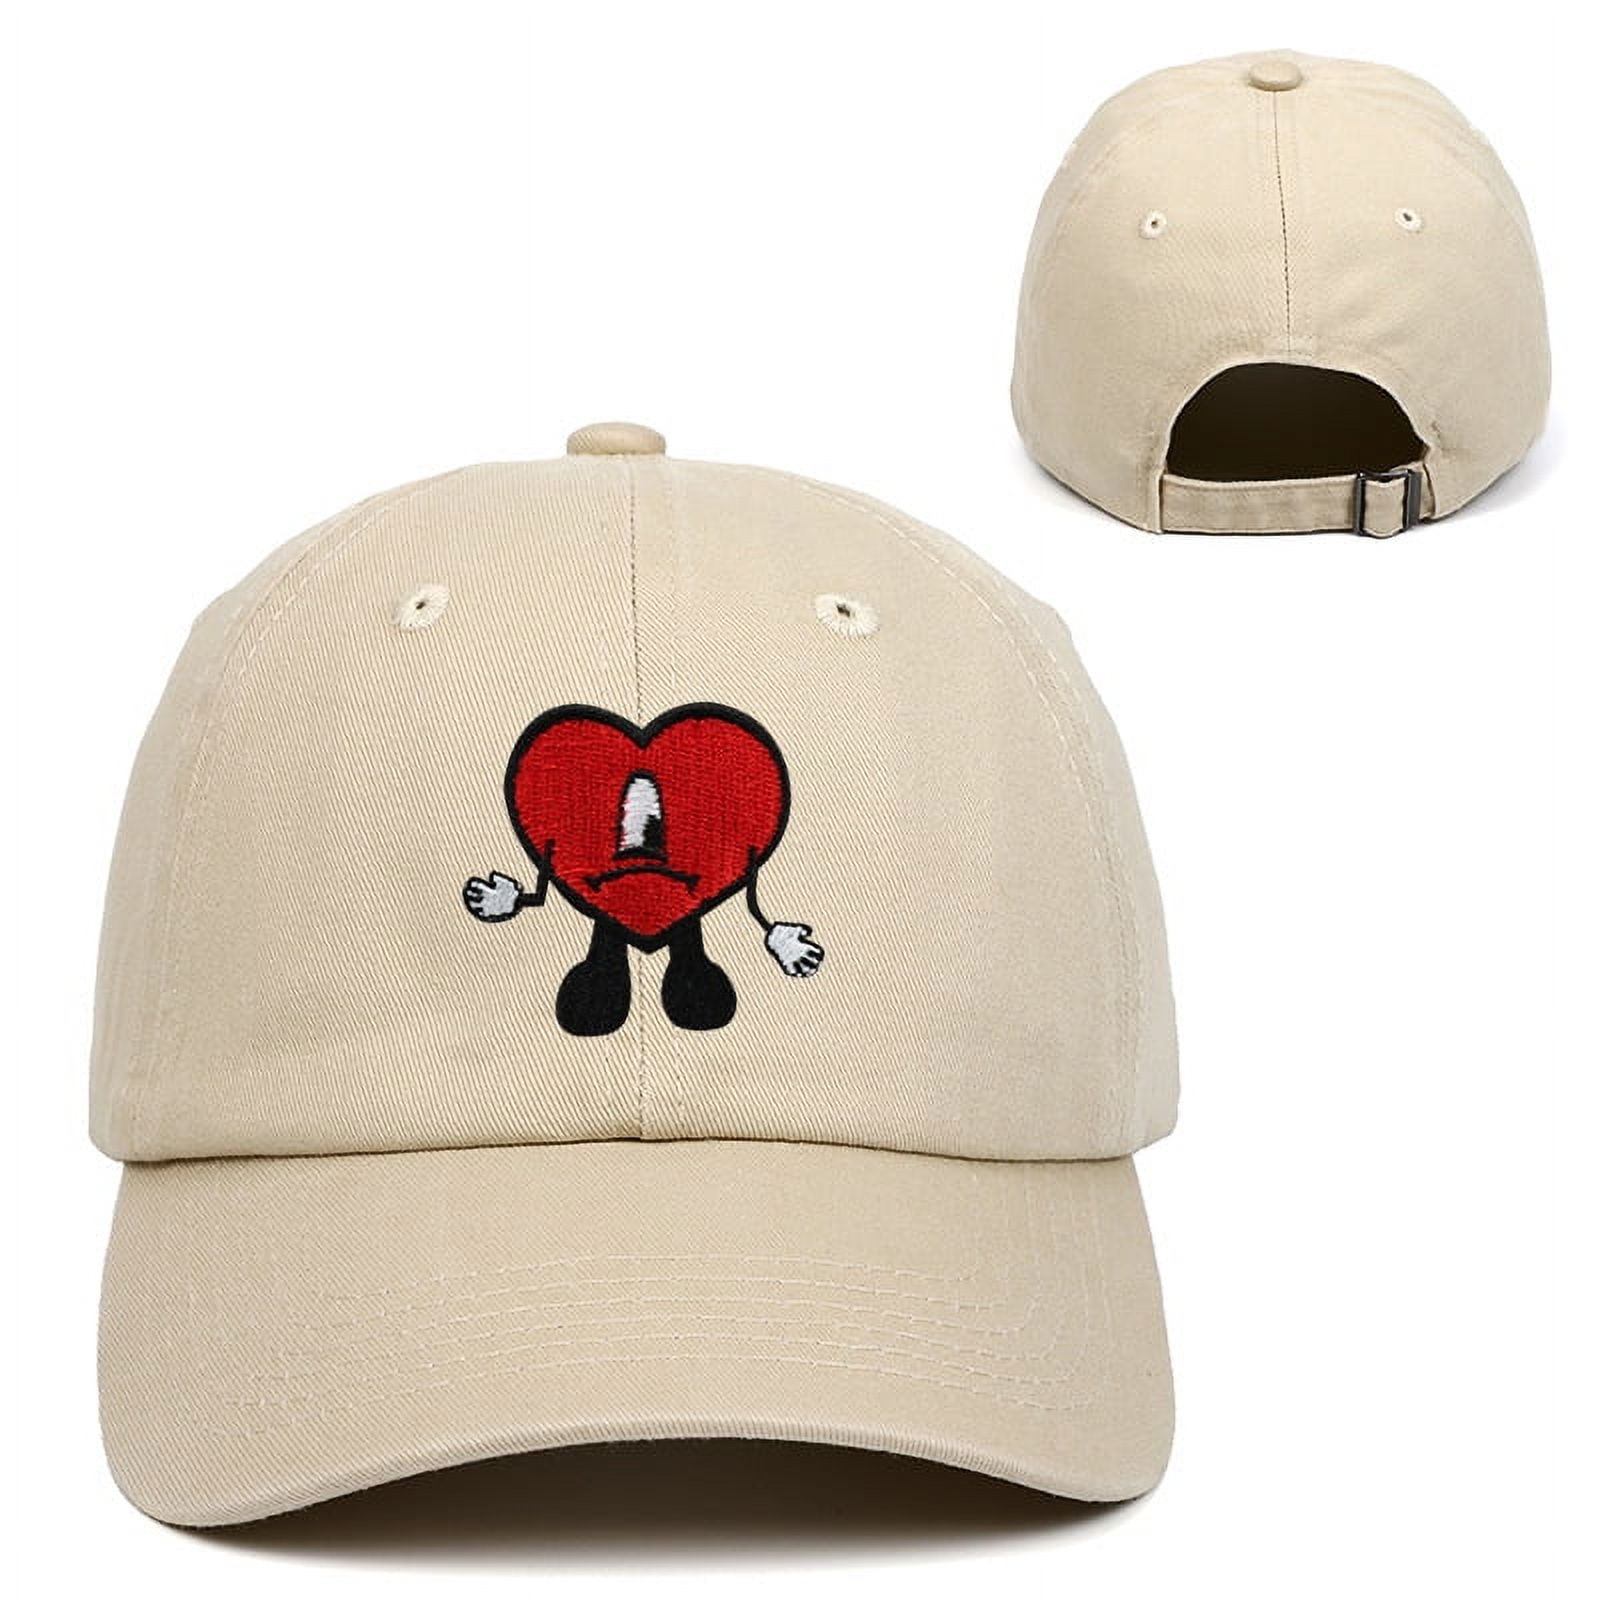 Bad Bunny Caps - New Fashion Rapper Singer Baseball Cap